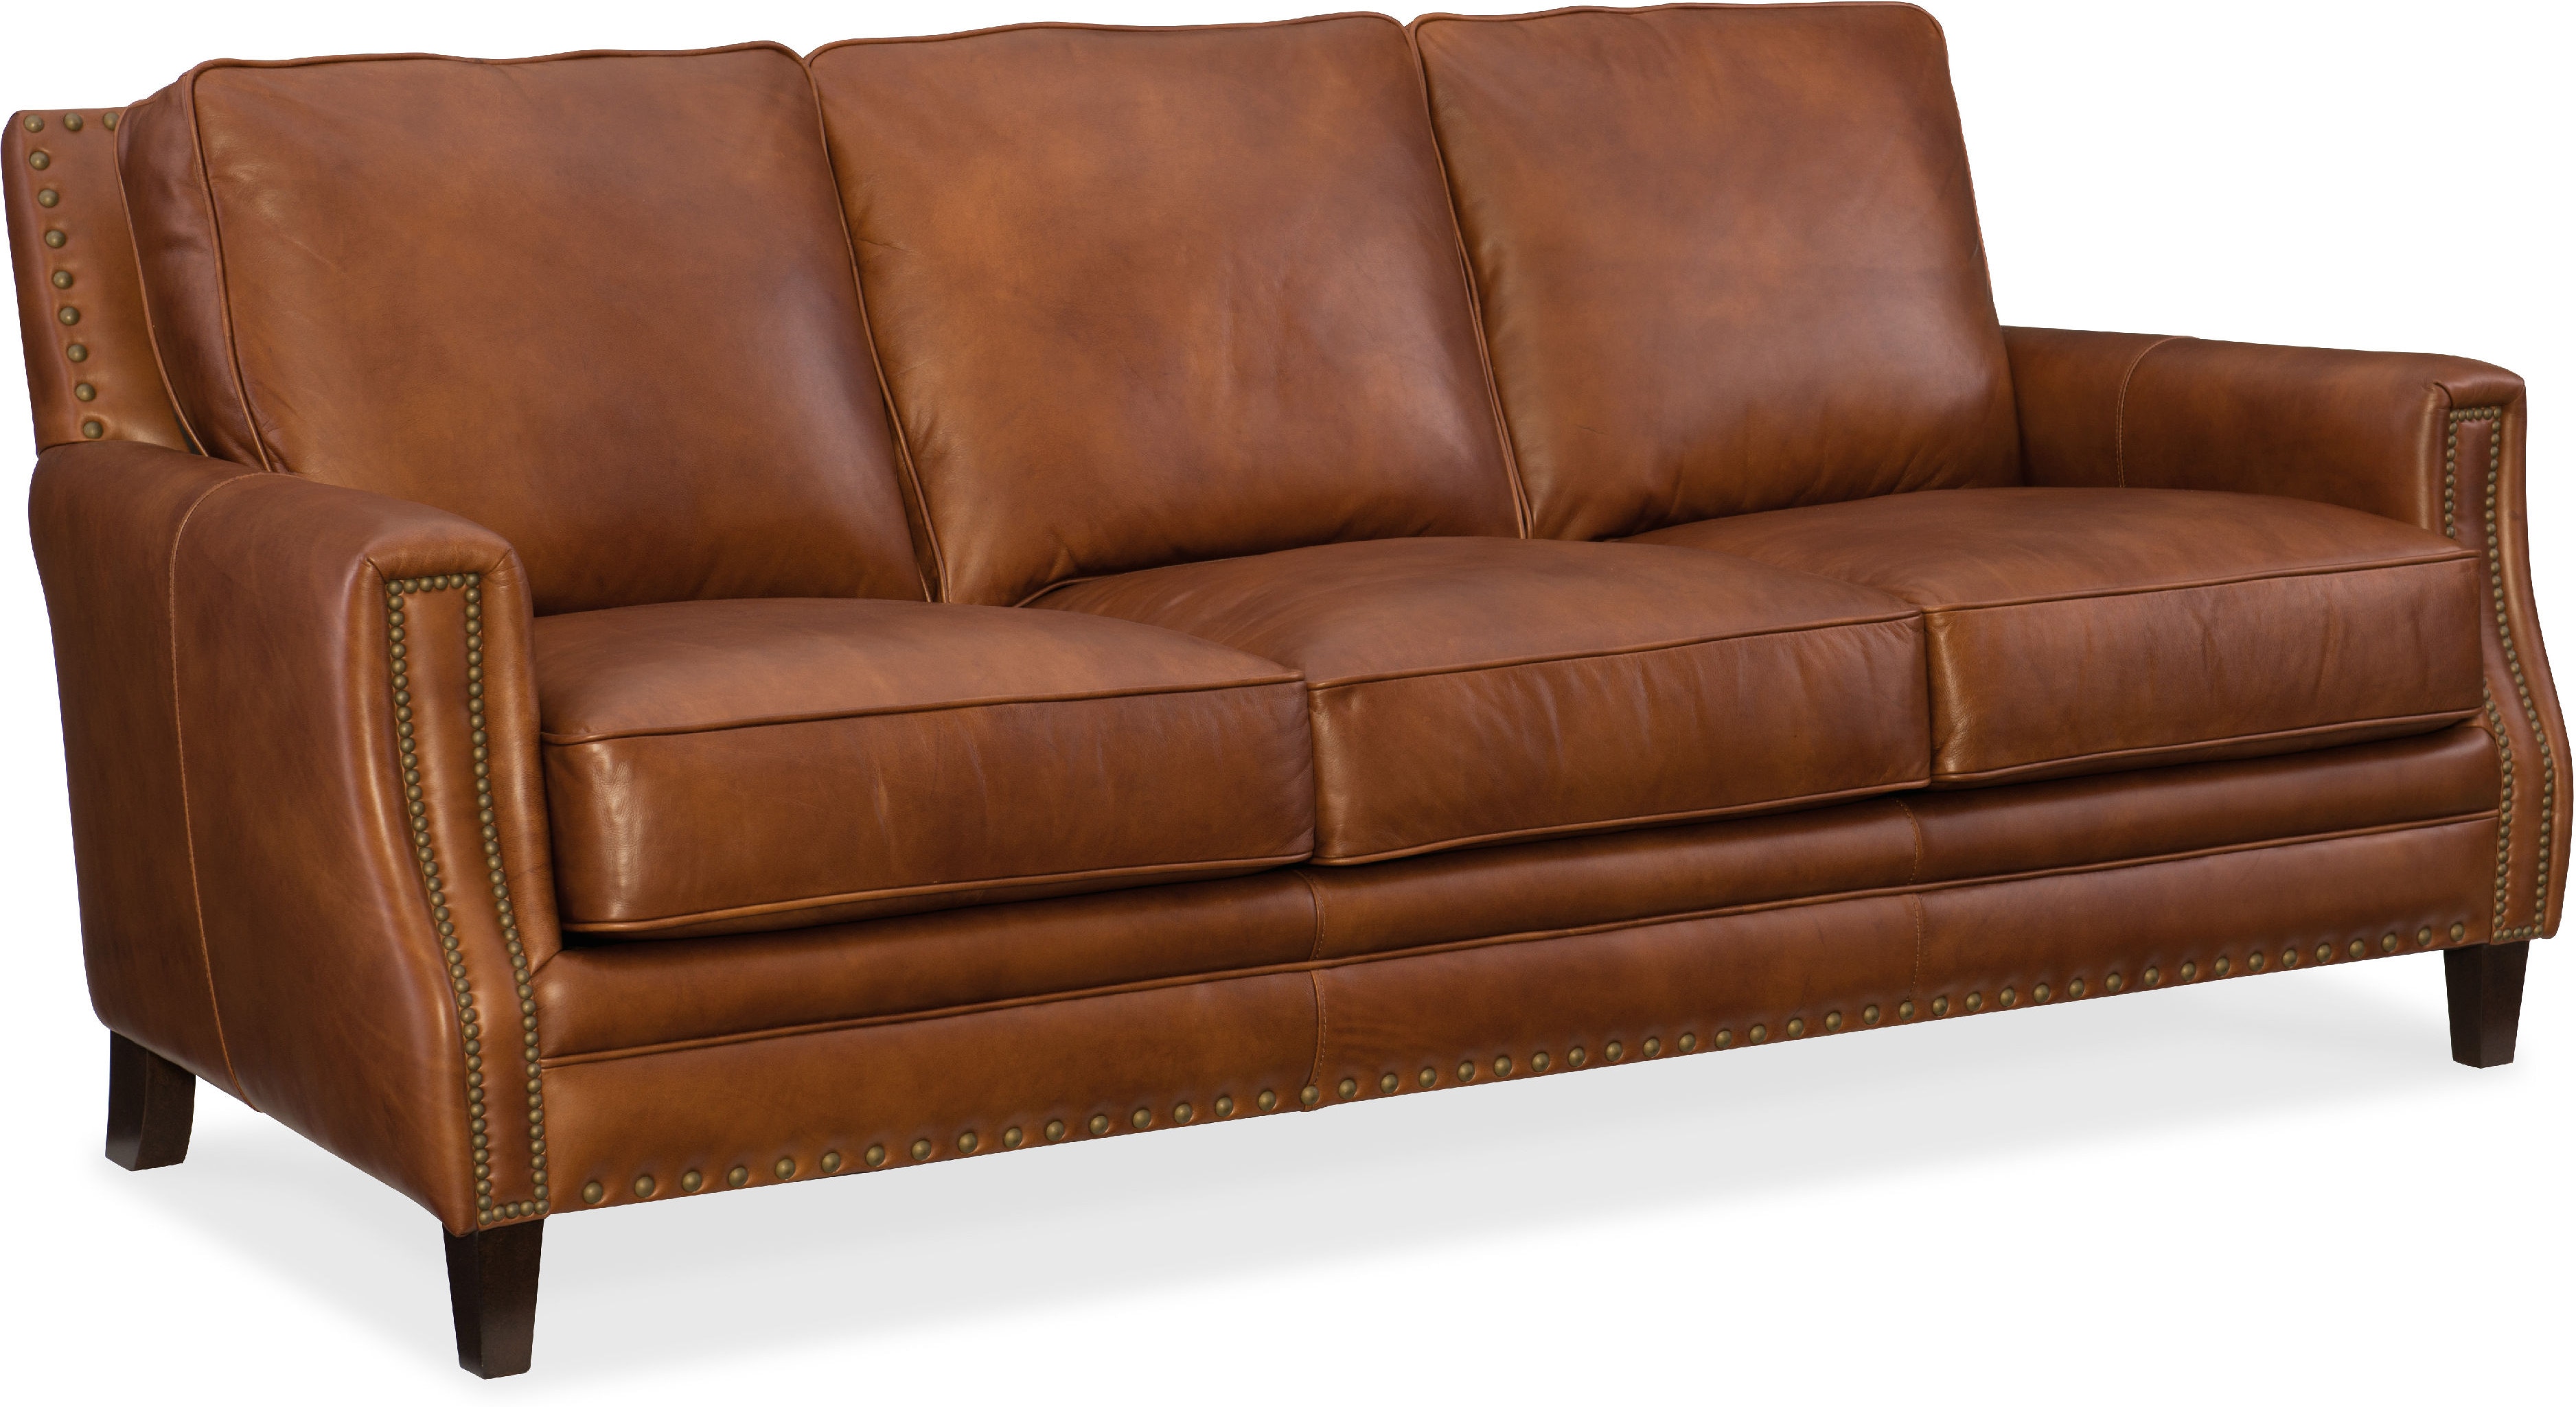 Hooker Furniture Nicolla Stationary Sofa